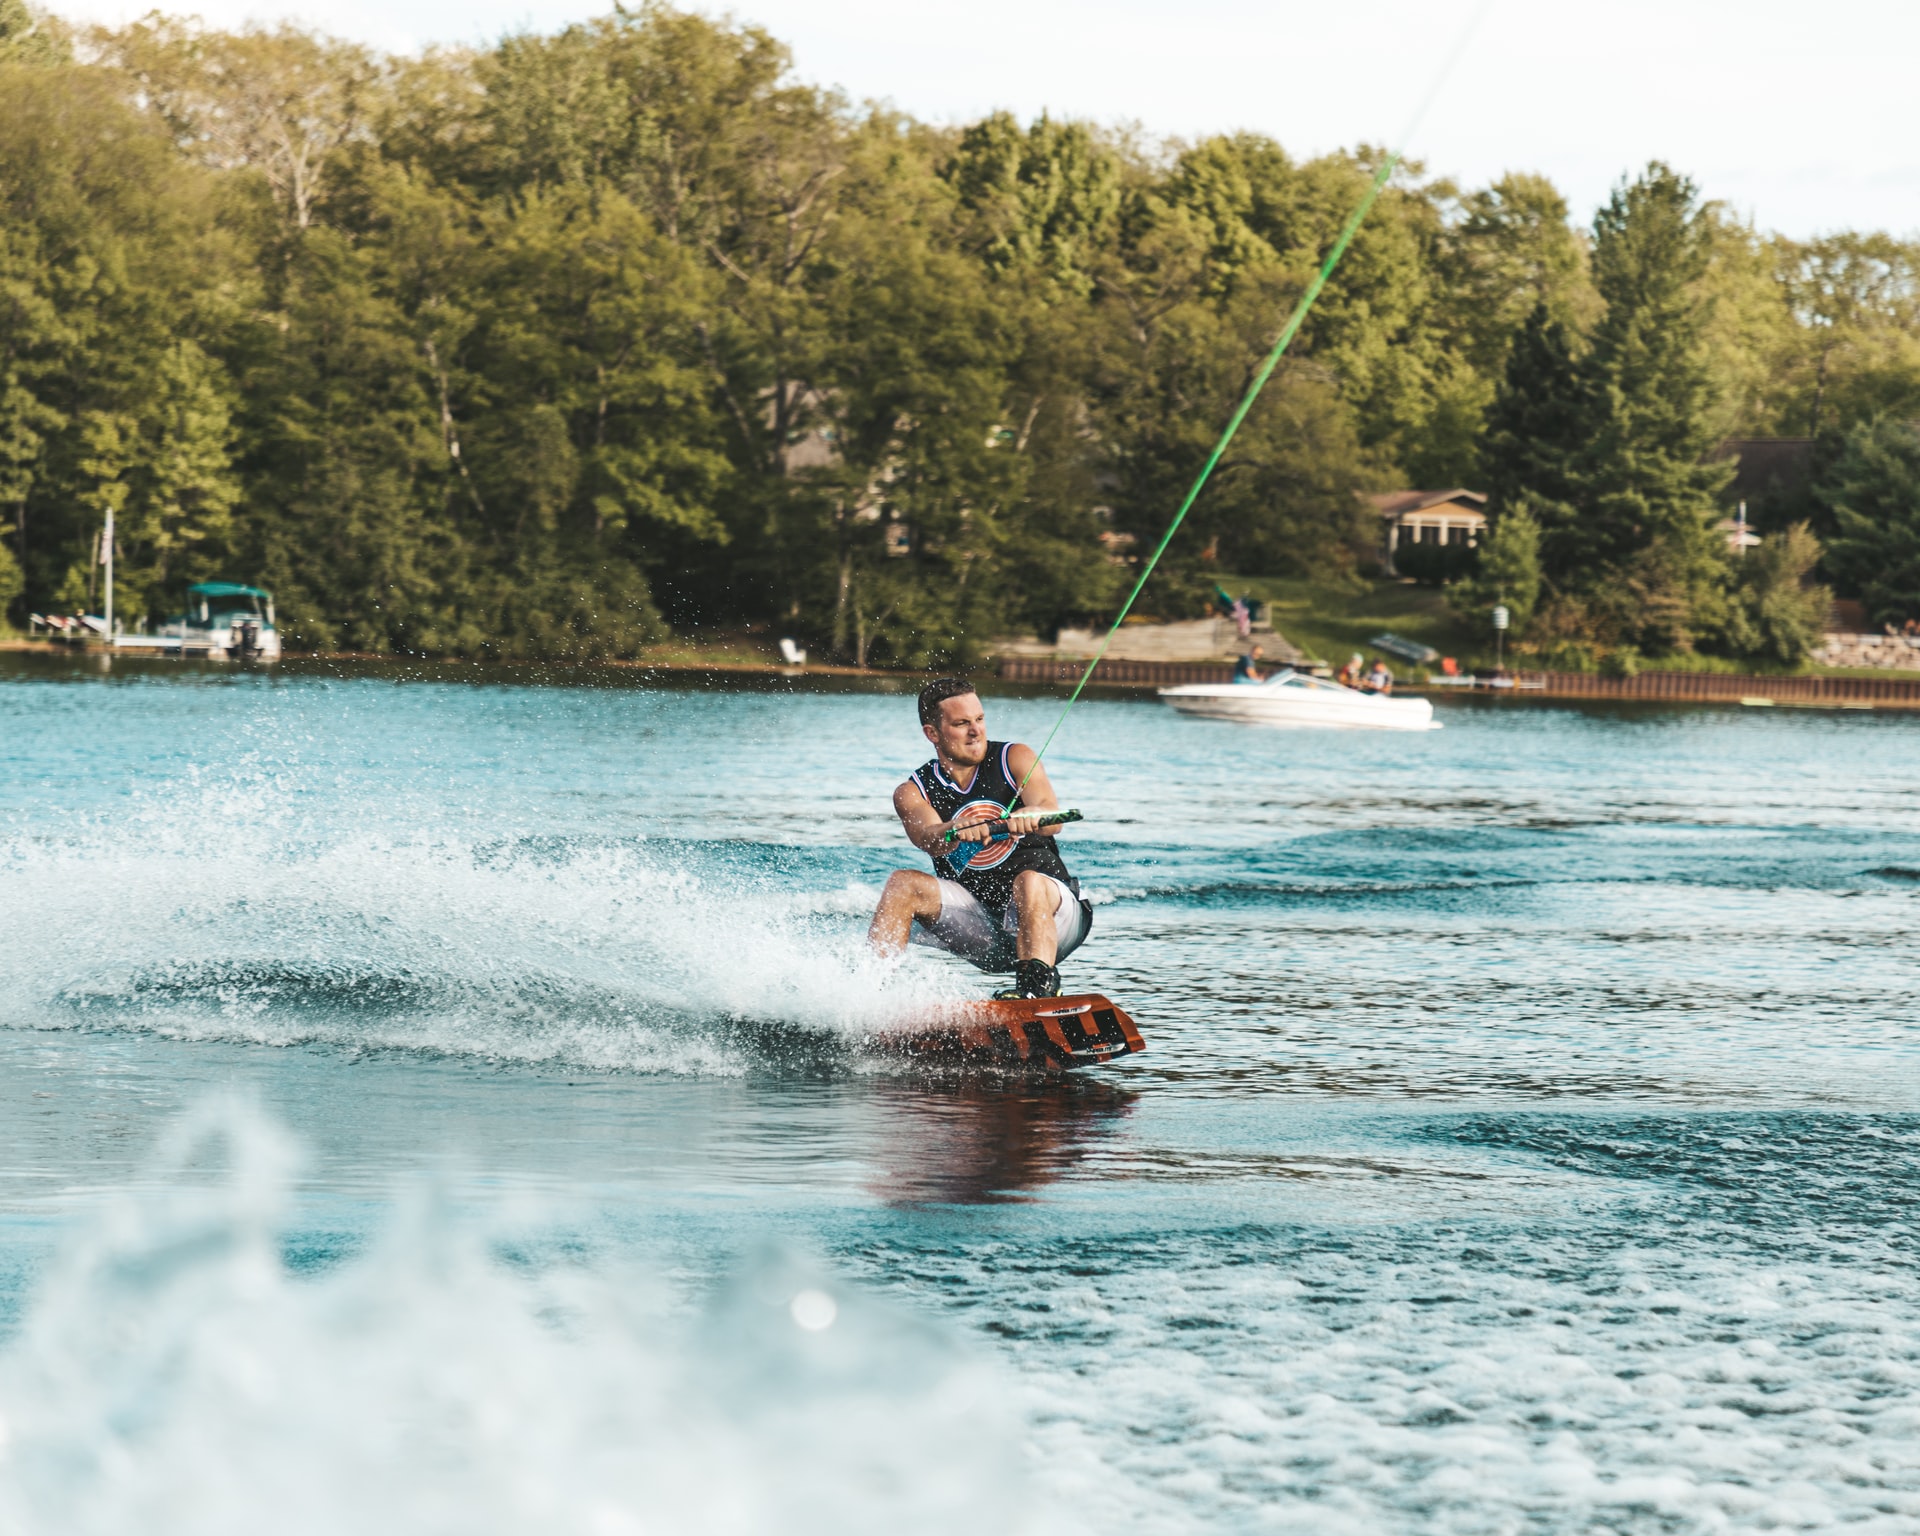 Can You Ski Behind a Pontoon Boat?